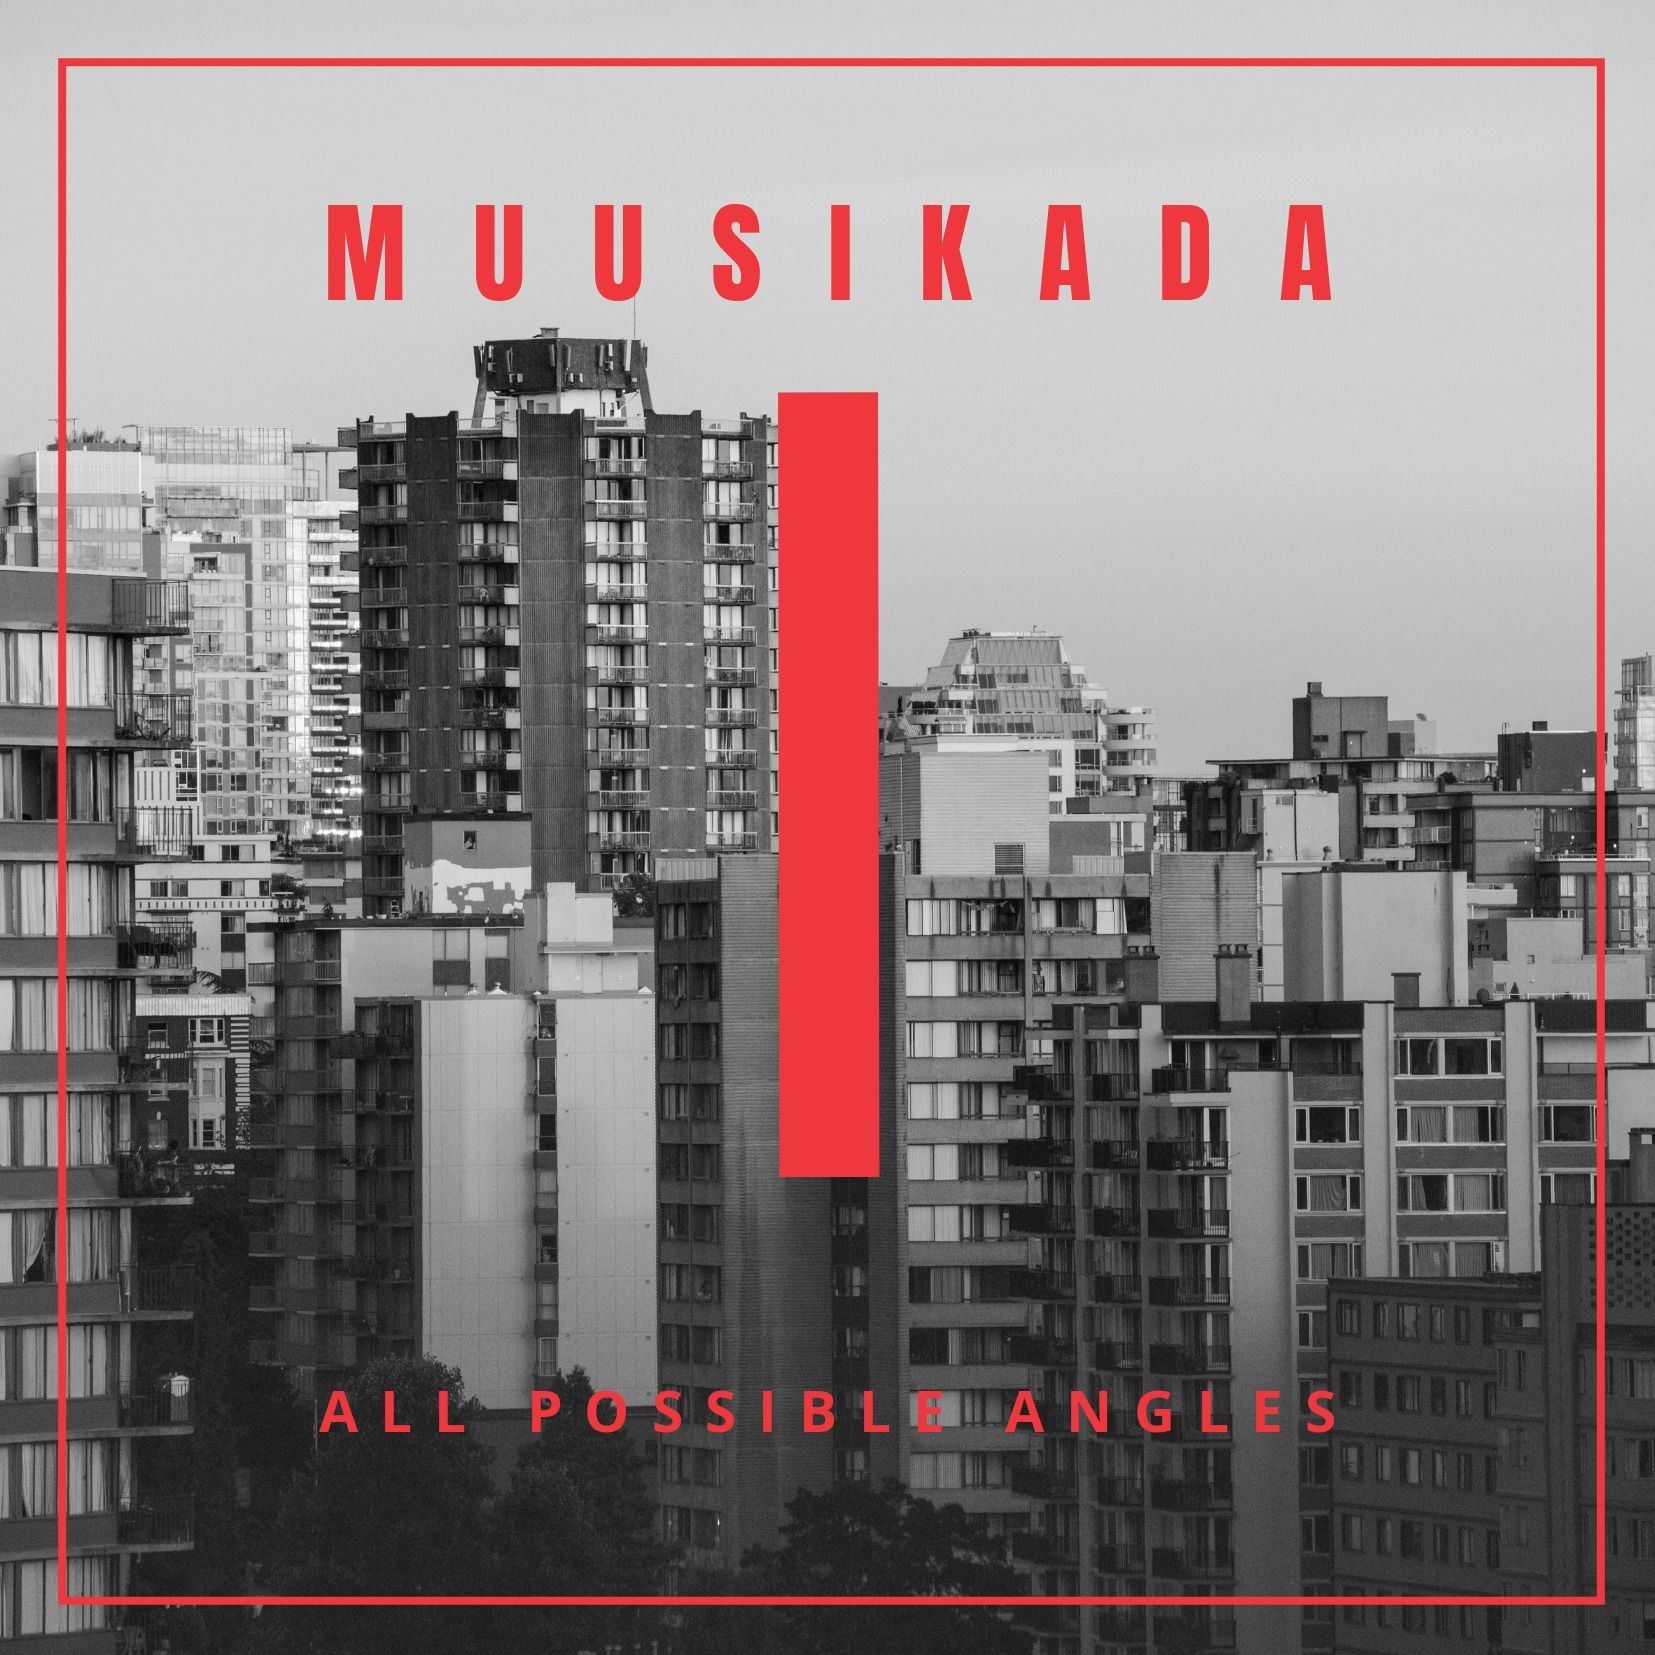 Graues Albumcover mit Stadtbild und rotem Text – Rote und graue Farben im Musikalbum-Cover-Design – Bild